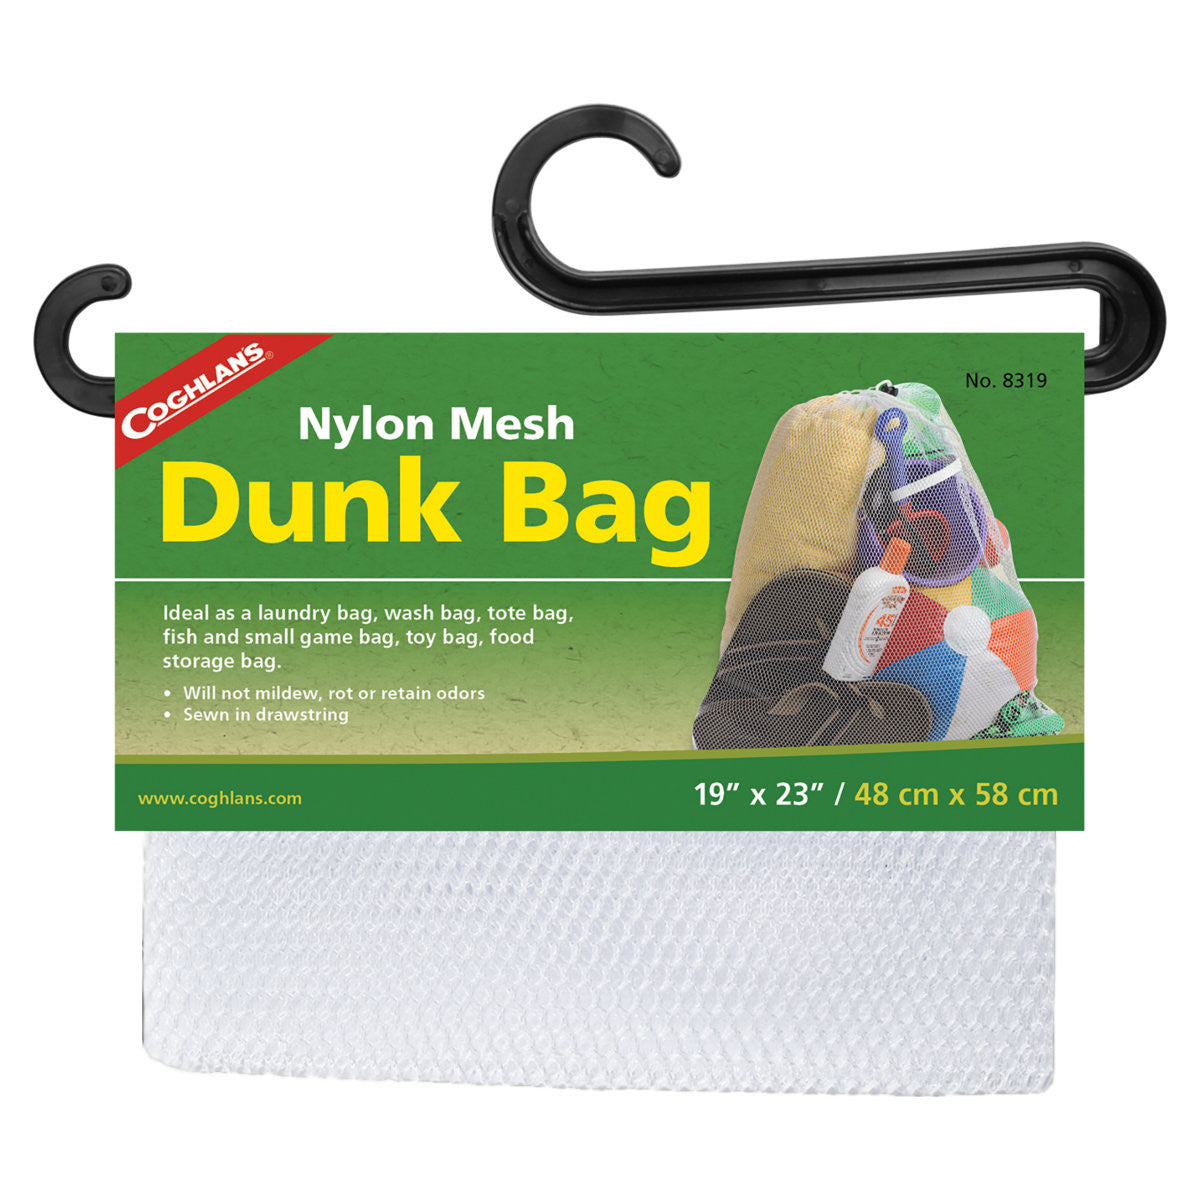 Coghlan's Nylon Mesh Dunk Bag 19" x 23"